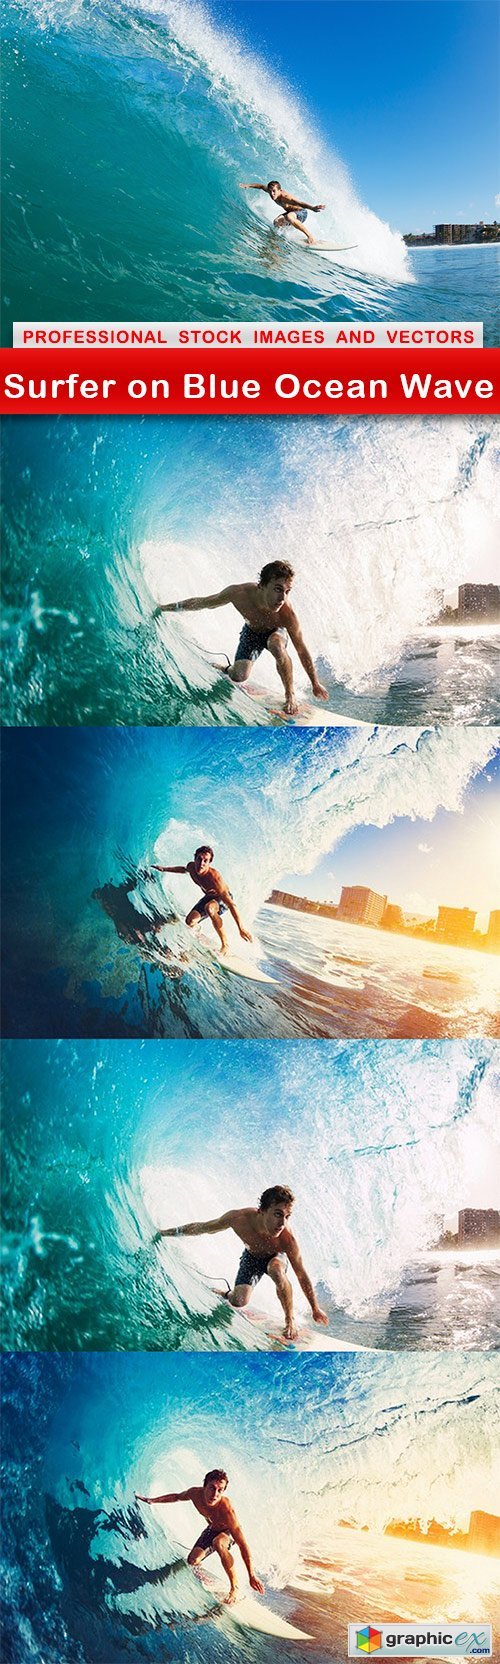 Surfer on Blue Ocean Wave - 5 UHQ JPEG